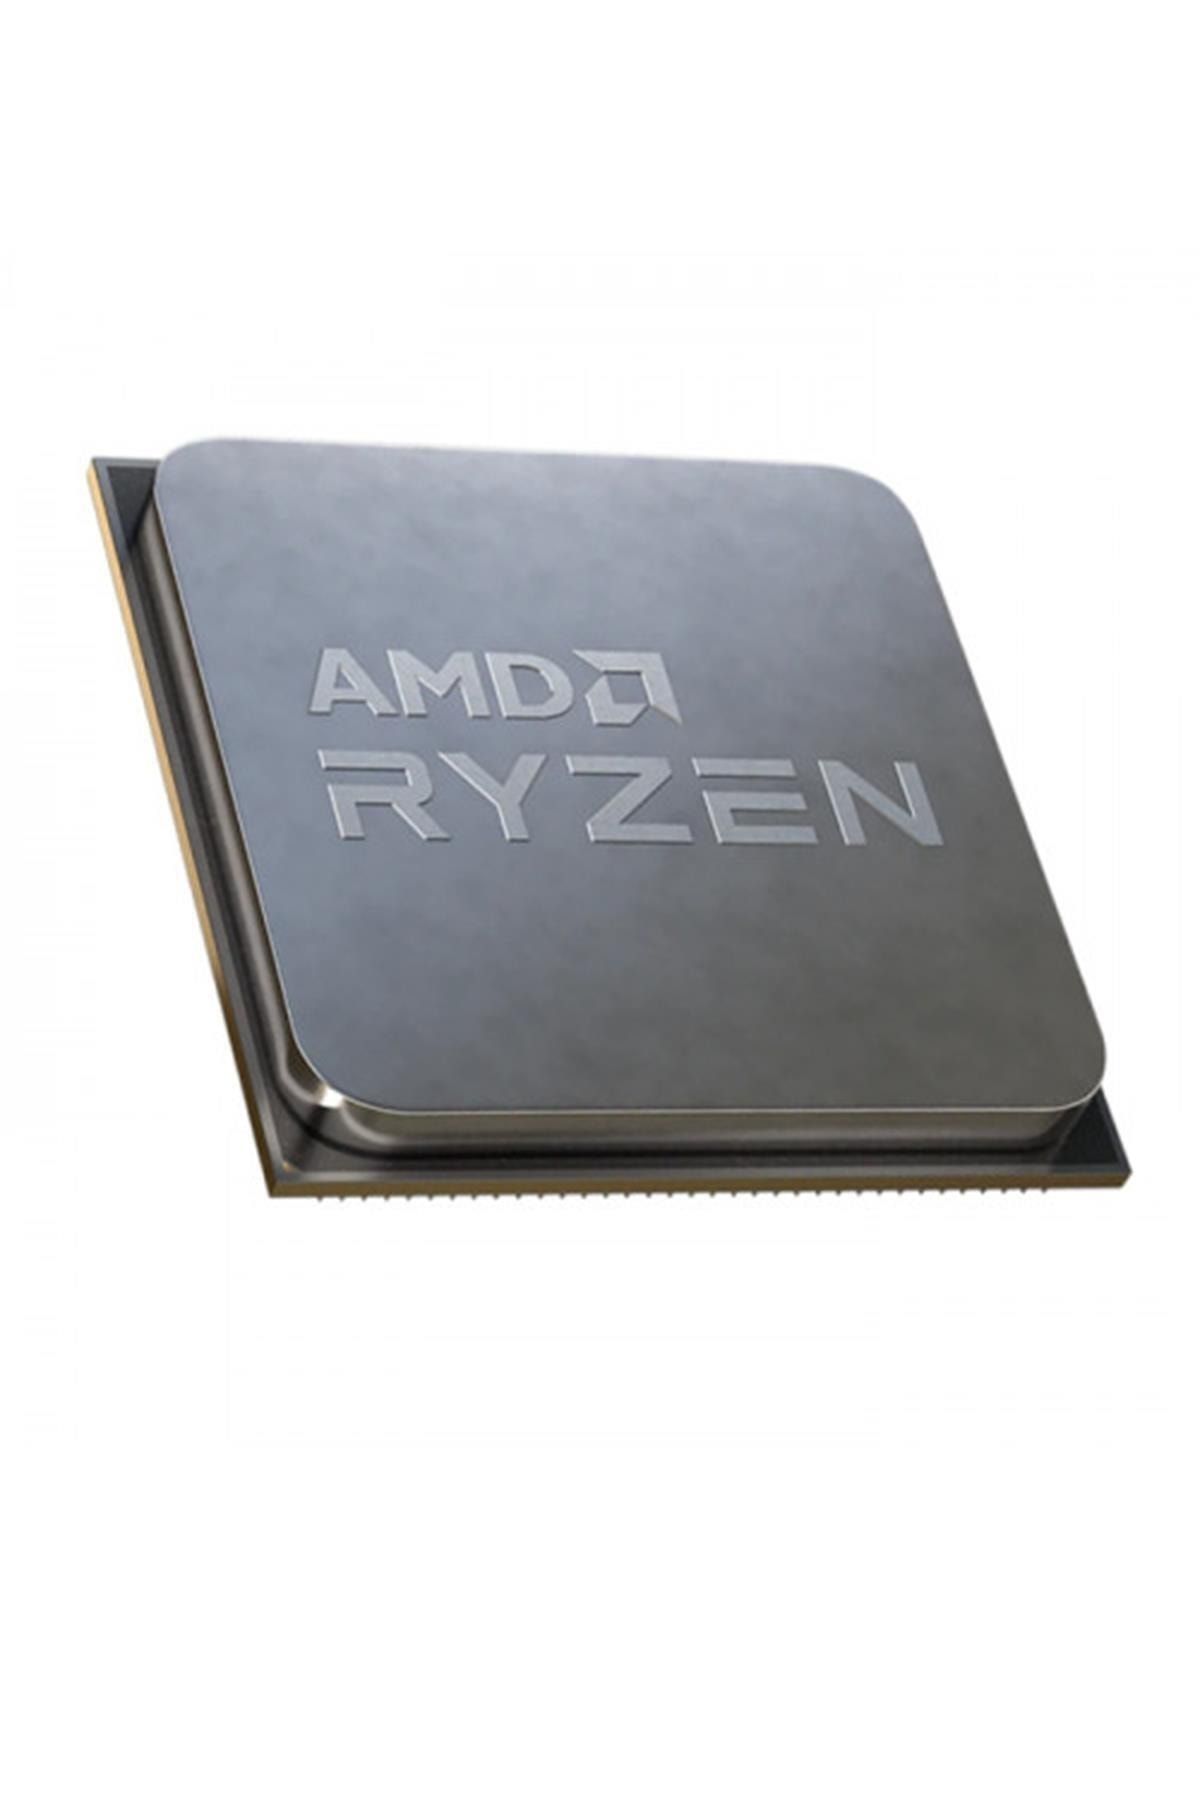 Amd CPU-AMD RYZEN 5 5500 3.6/4.2GHZ AM4 16MB 65W AMD İŞLEMCİ